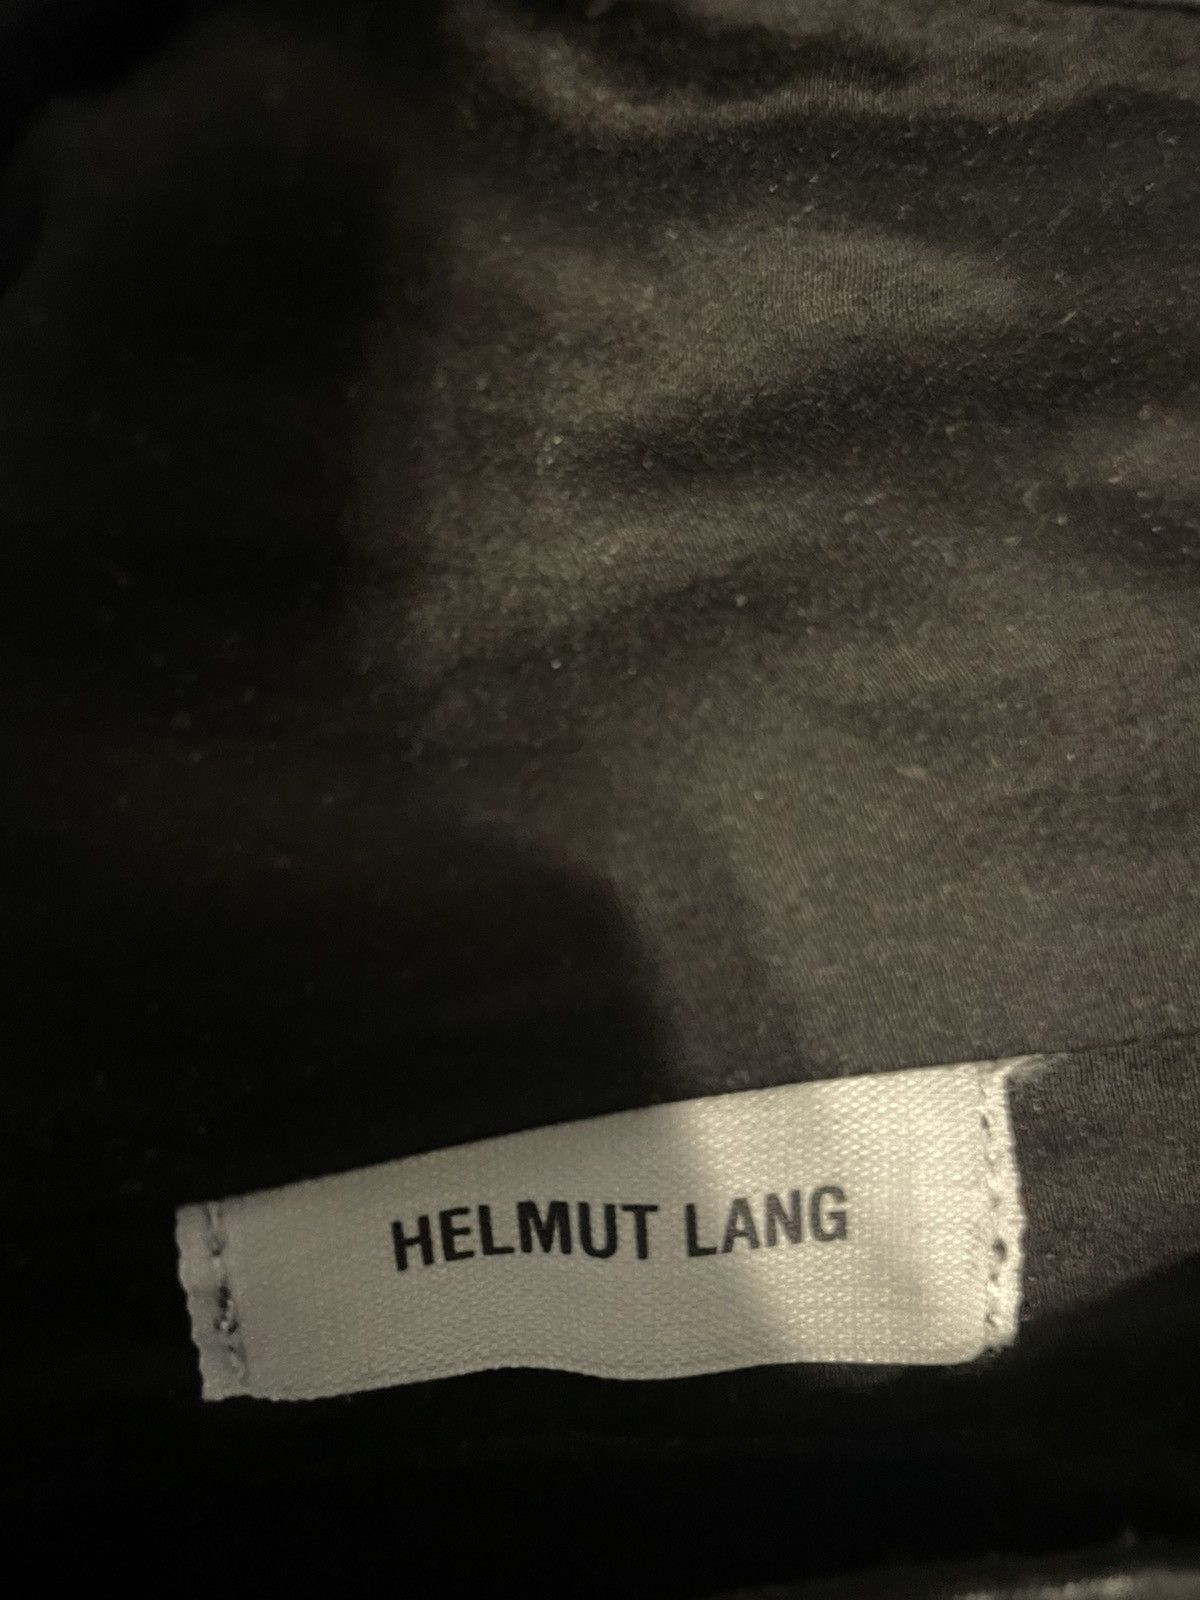 Helmut Lang Helmut Lang Waxed Jeans Size 27" / US 4 / IT 40 - 8 Thumbnail